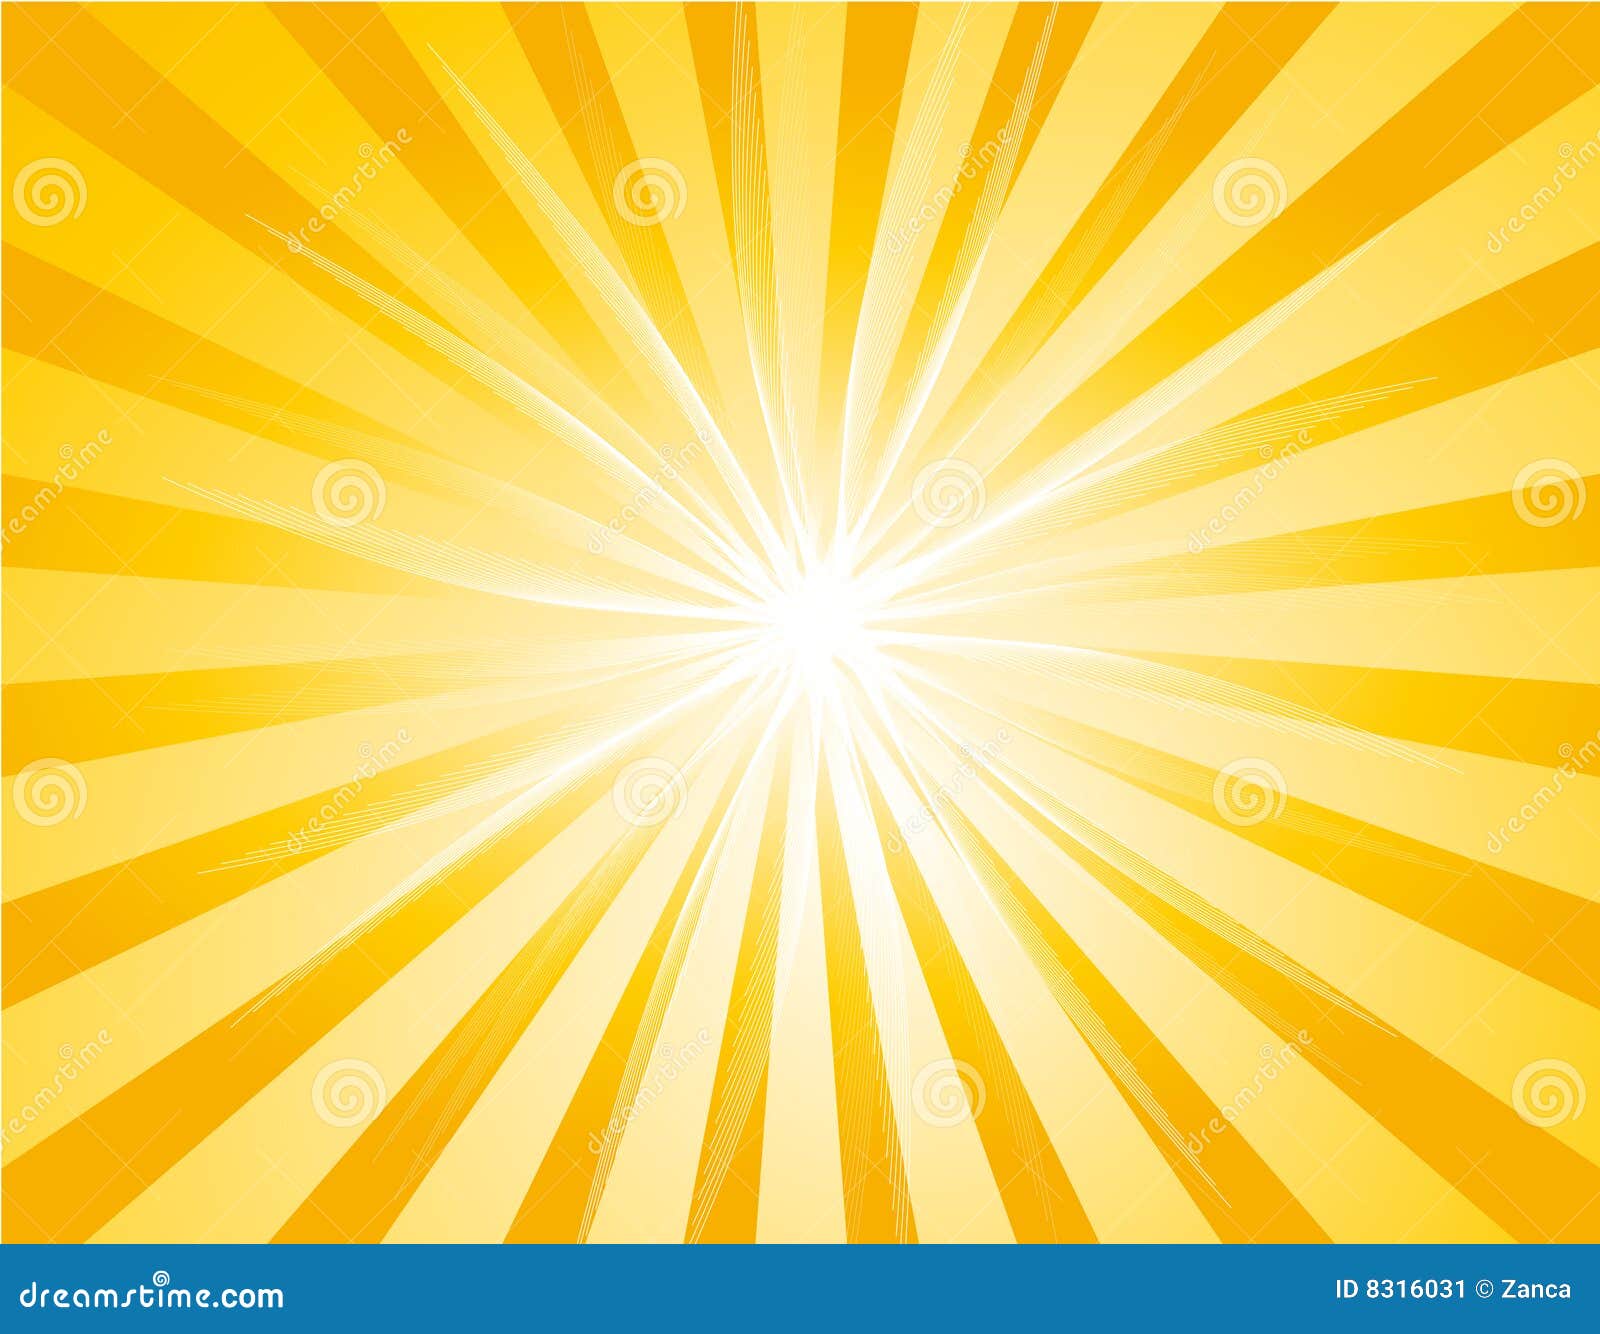 Yellow sunburst background stock vector. Illustration of spring - 8316031